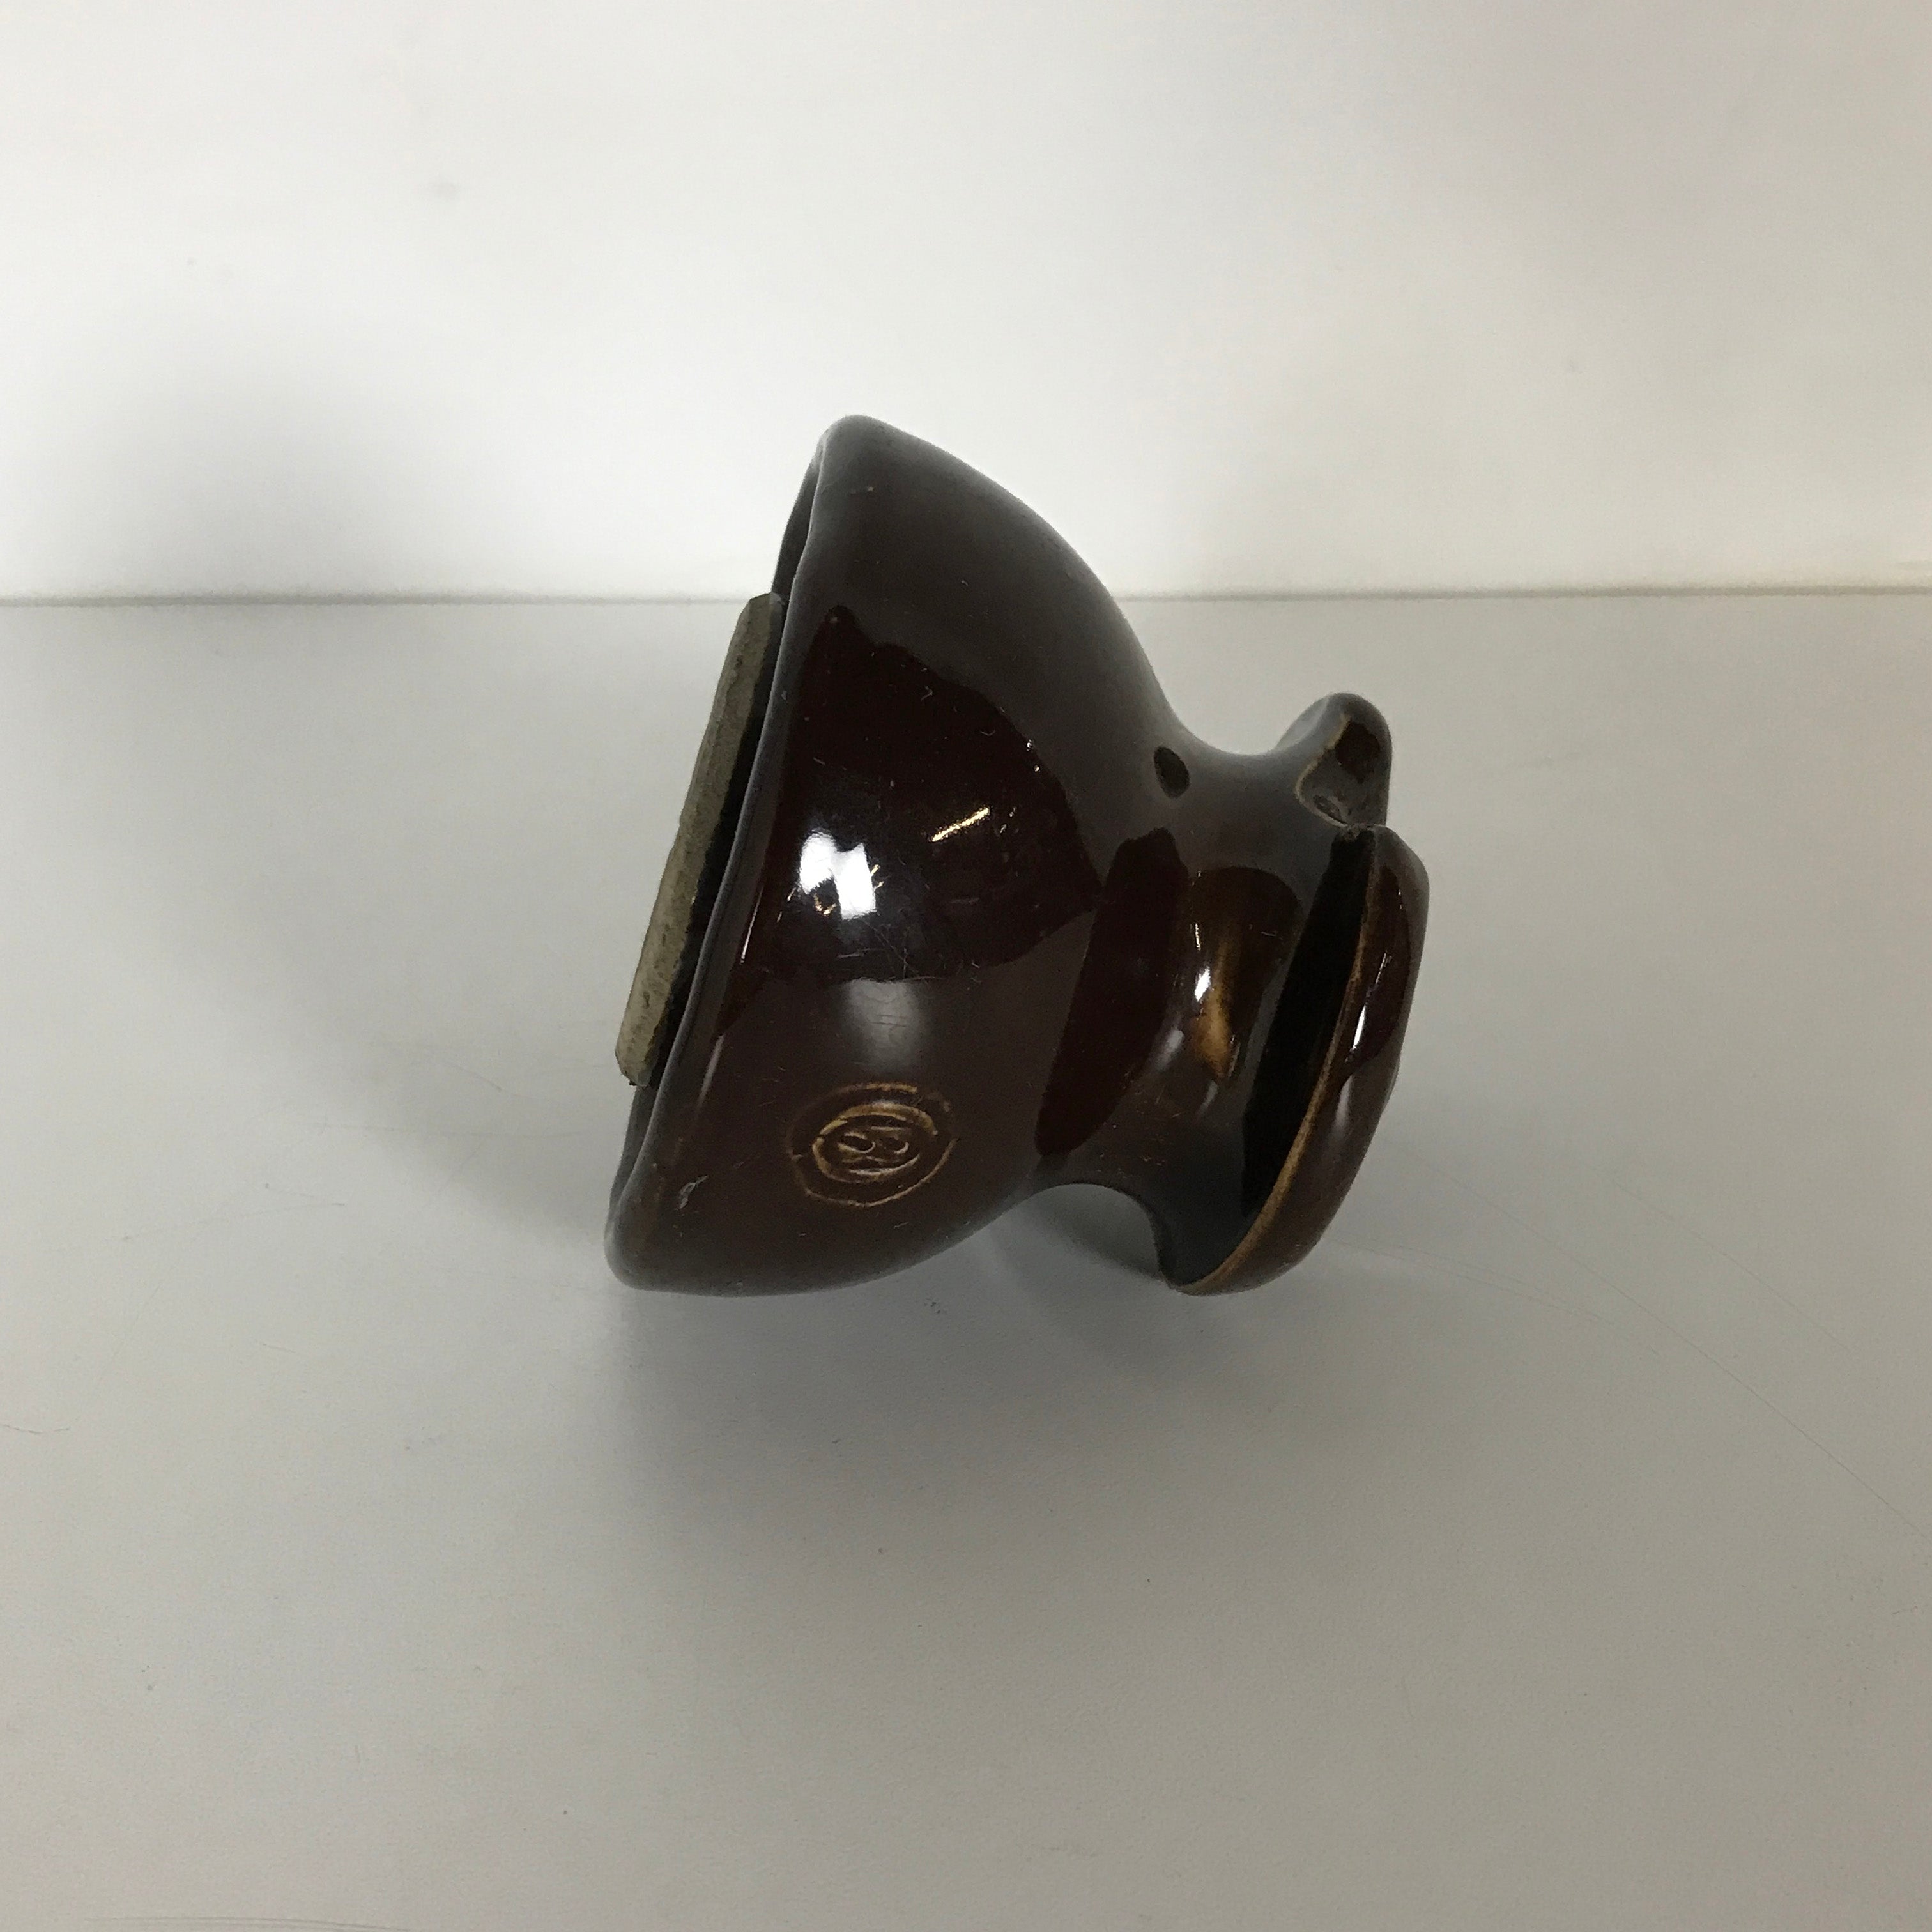 Antique Dark Brown 3" Tall Ceramic Insulator